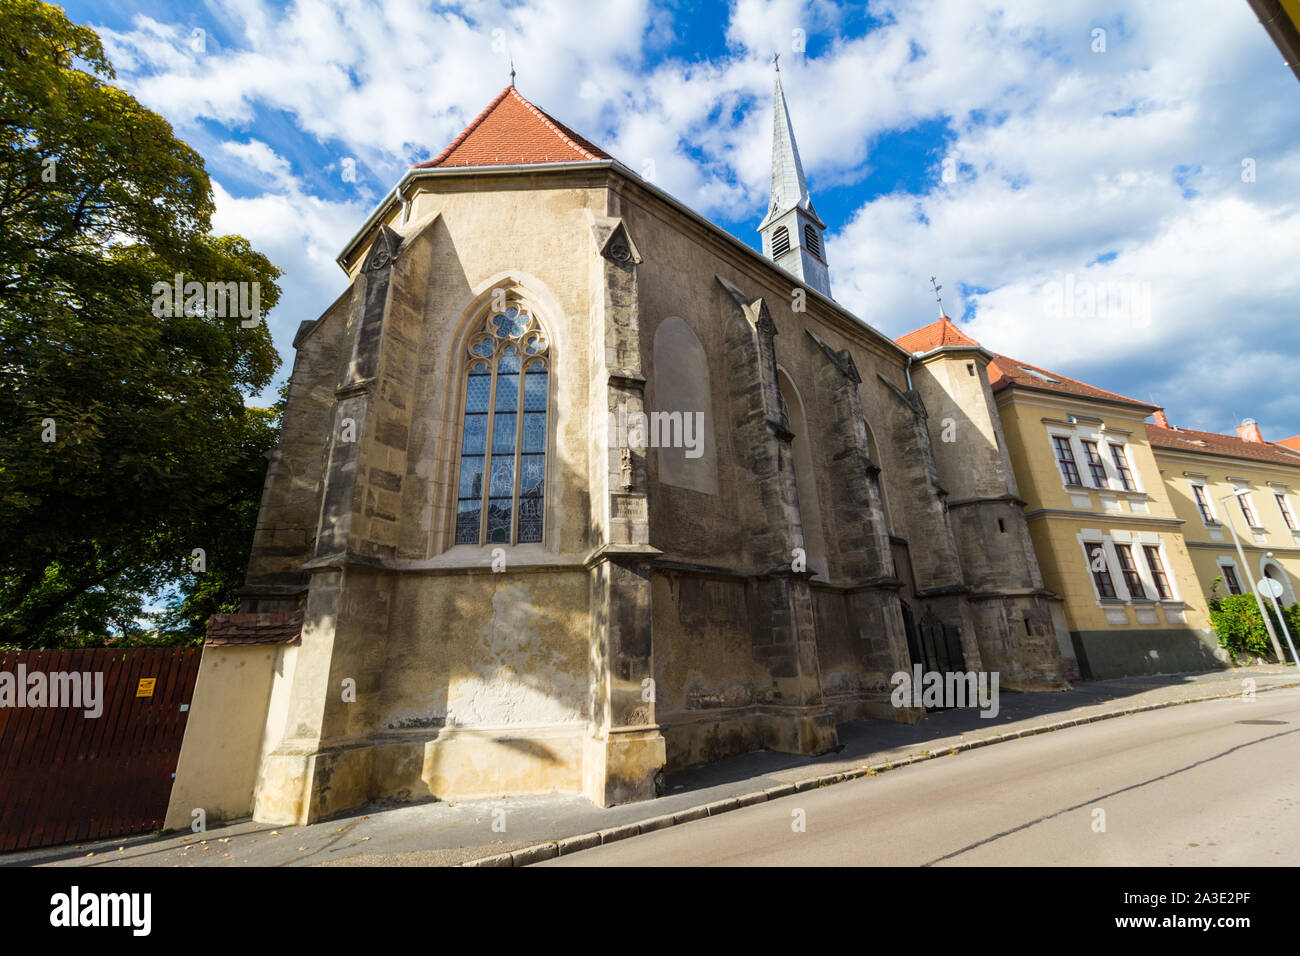 Keresztelo Szent Janos kapolna (St. John the Baptist chapel) built by Johannites in 13th century, Sopron, Hungary Stock Photo